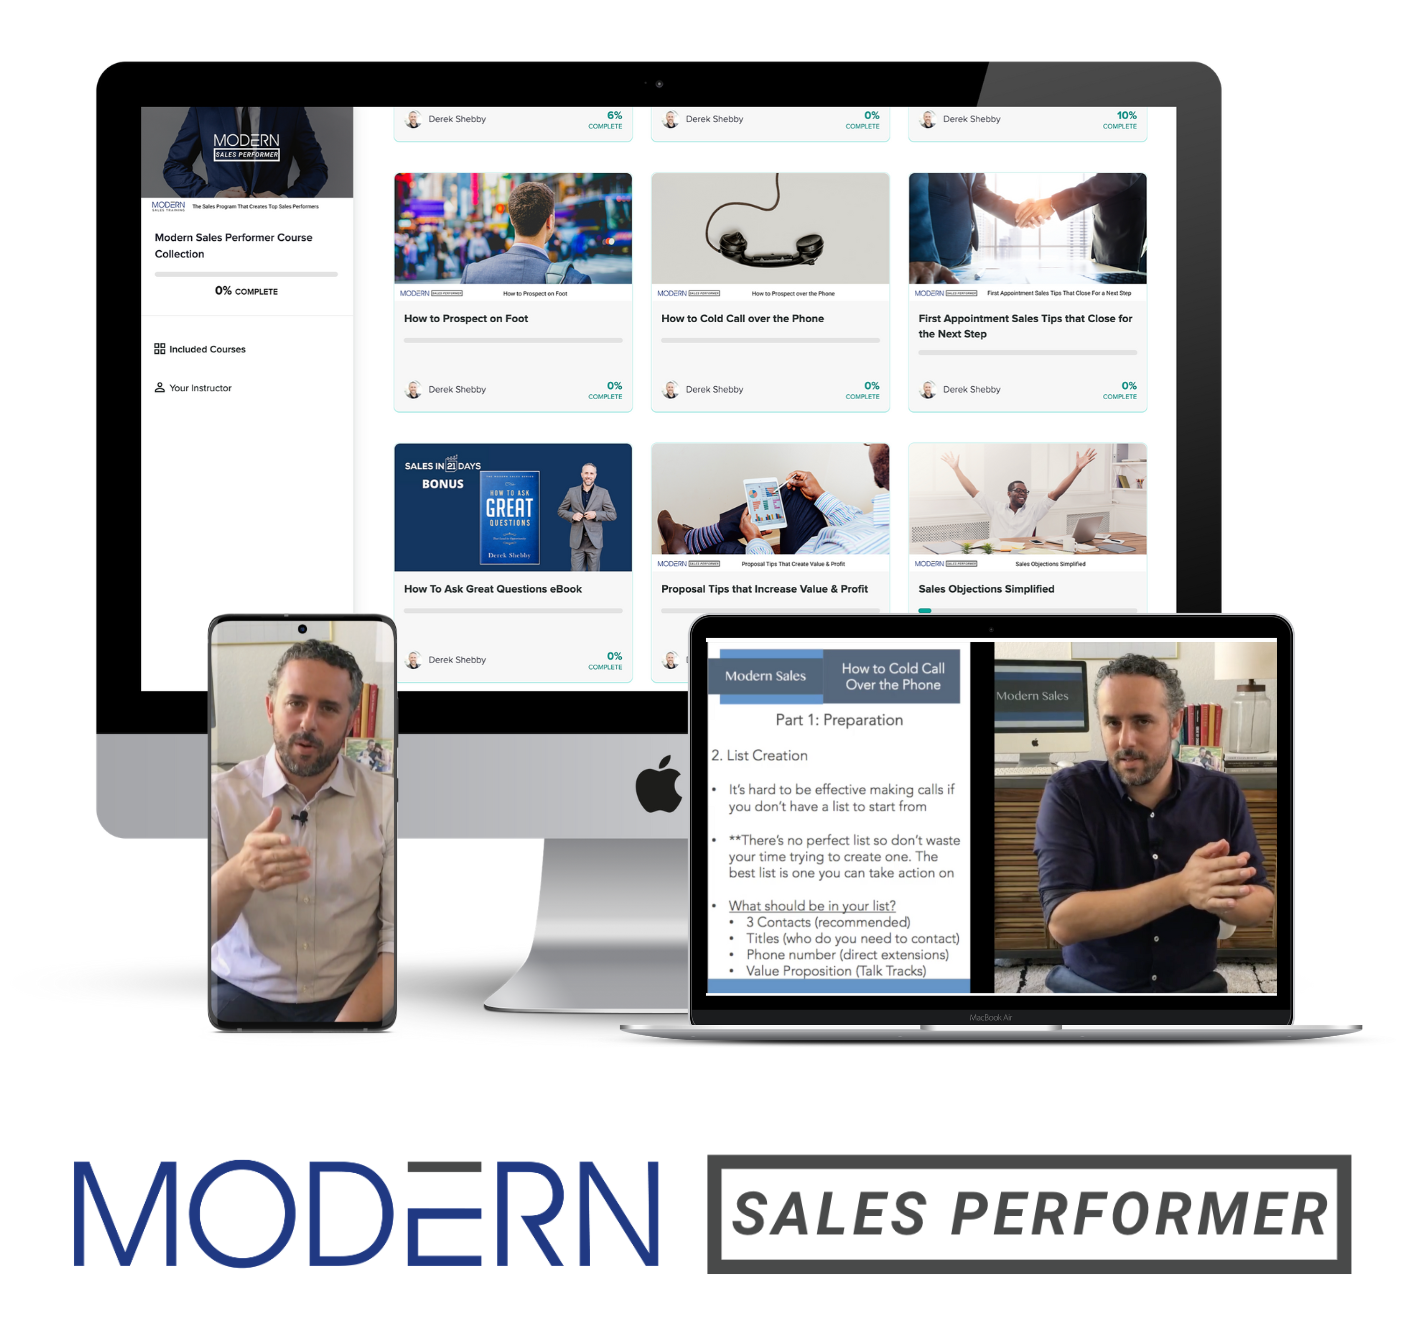 Modern Sales Performer